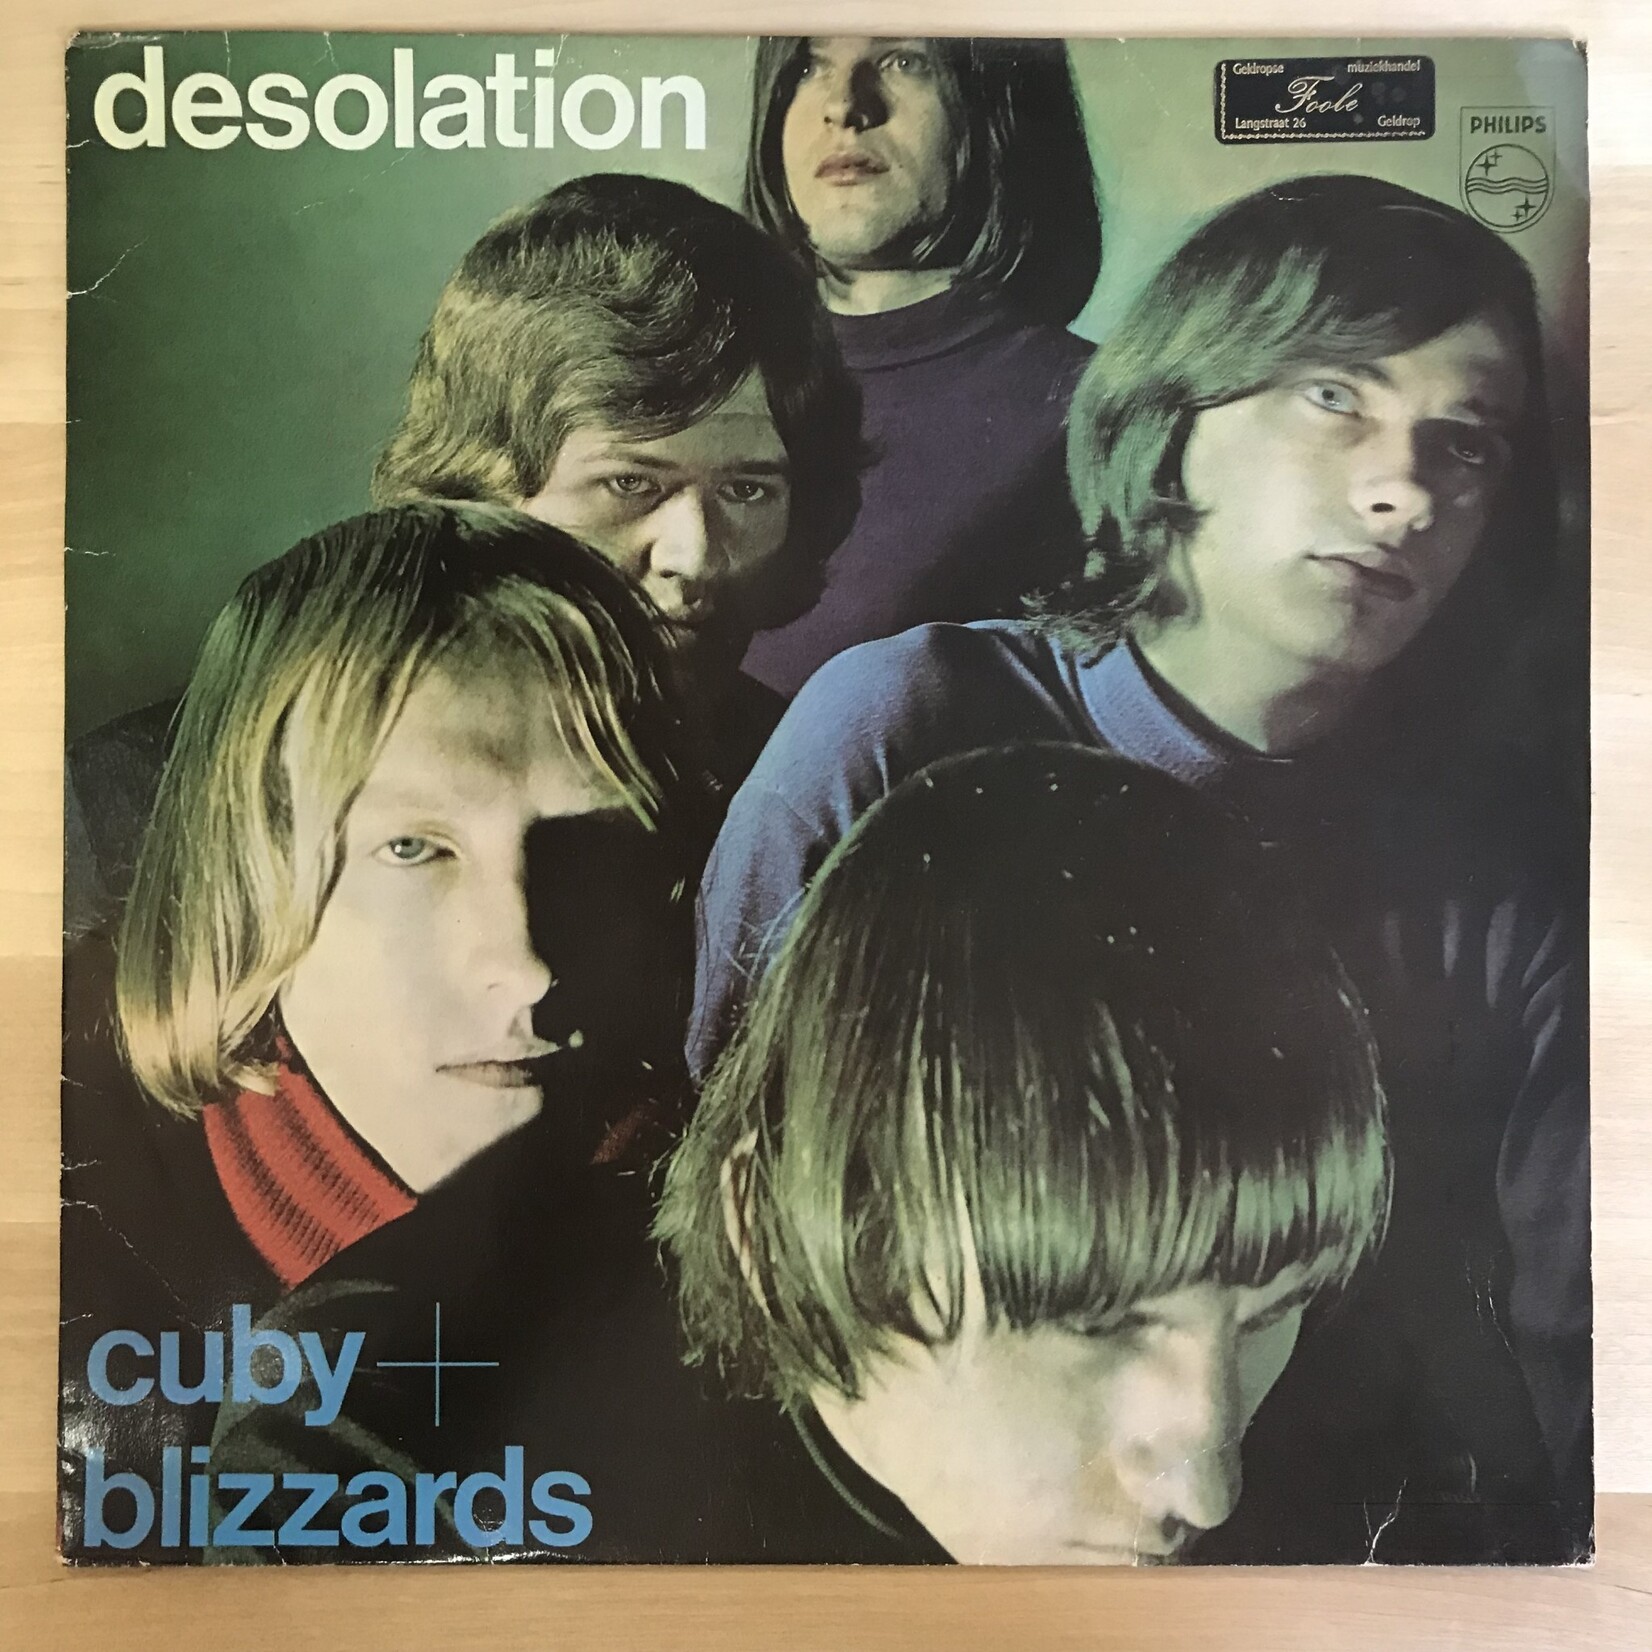 Cuby + Blizzards - Desolation - 6440 309 - Vinyl LP (USED)